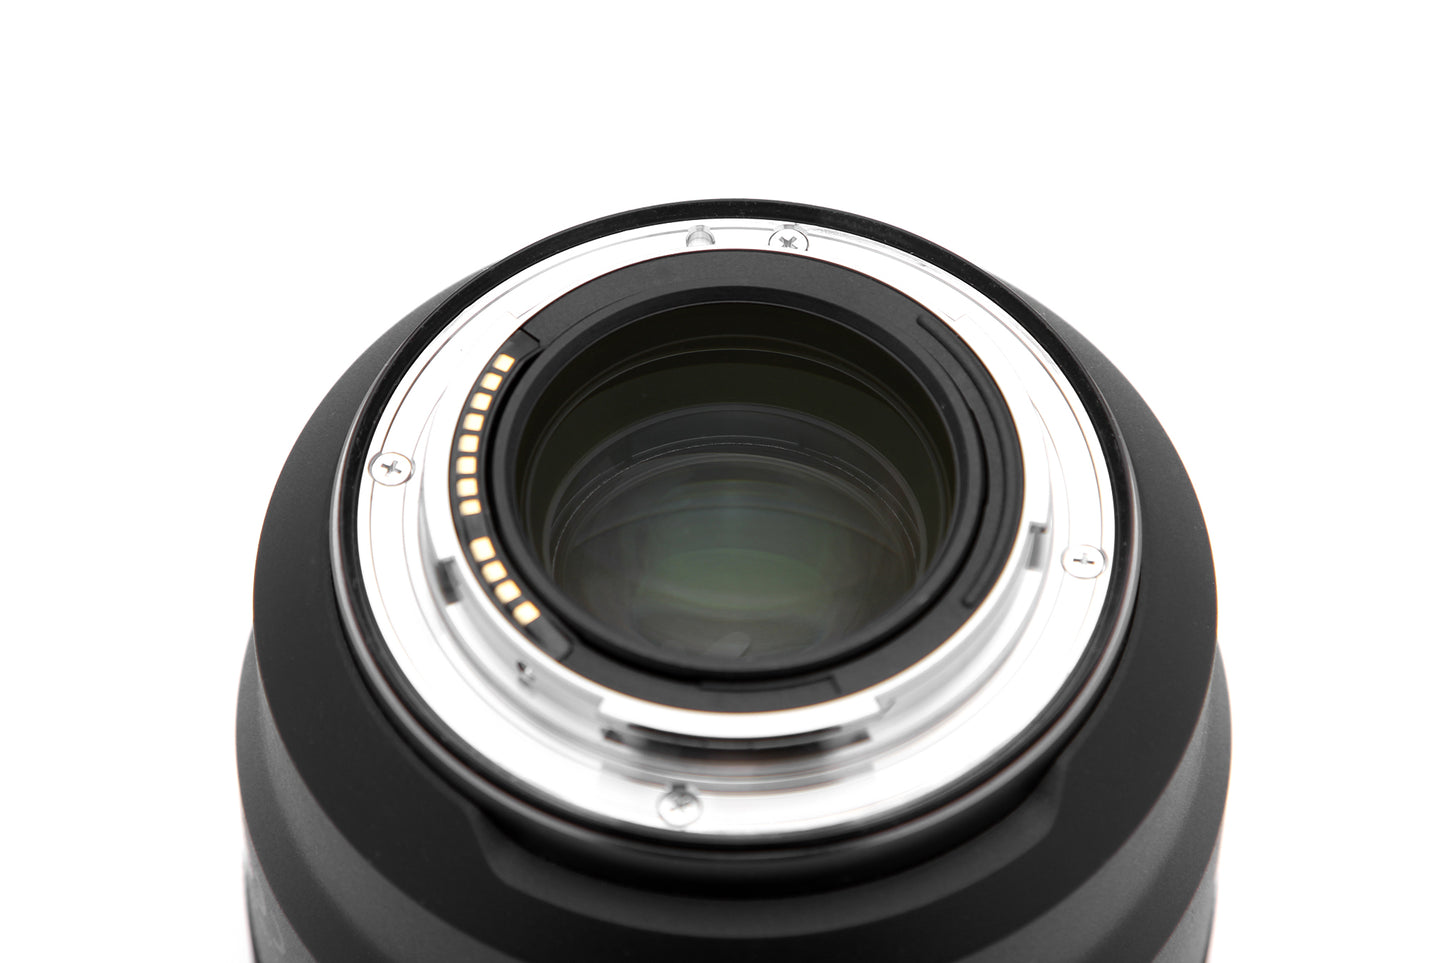 Canon RF 50mm 1.2L USM Lens